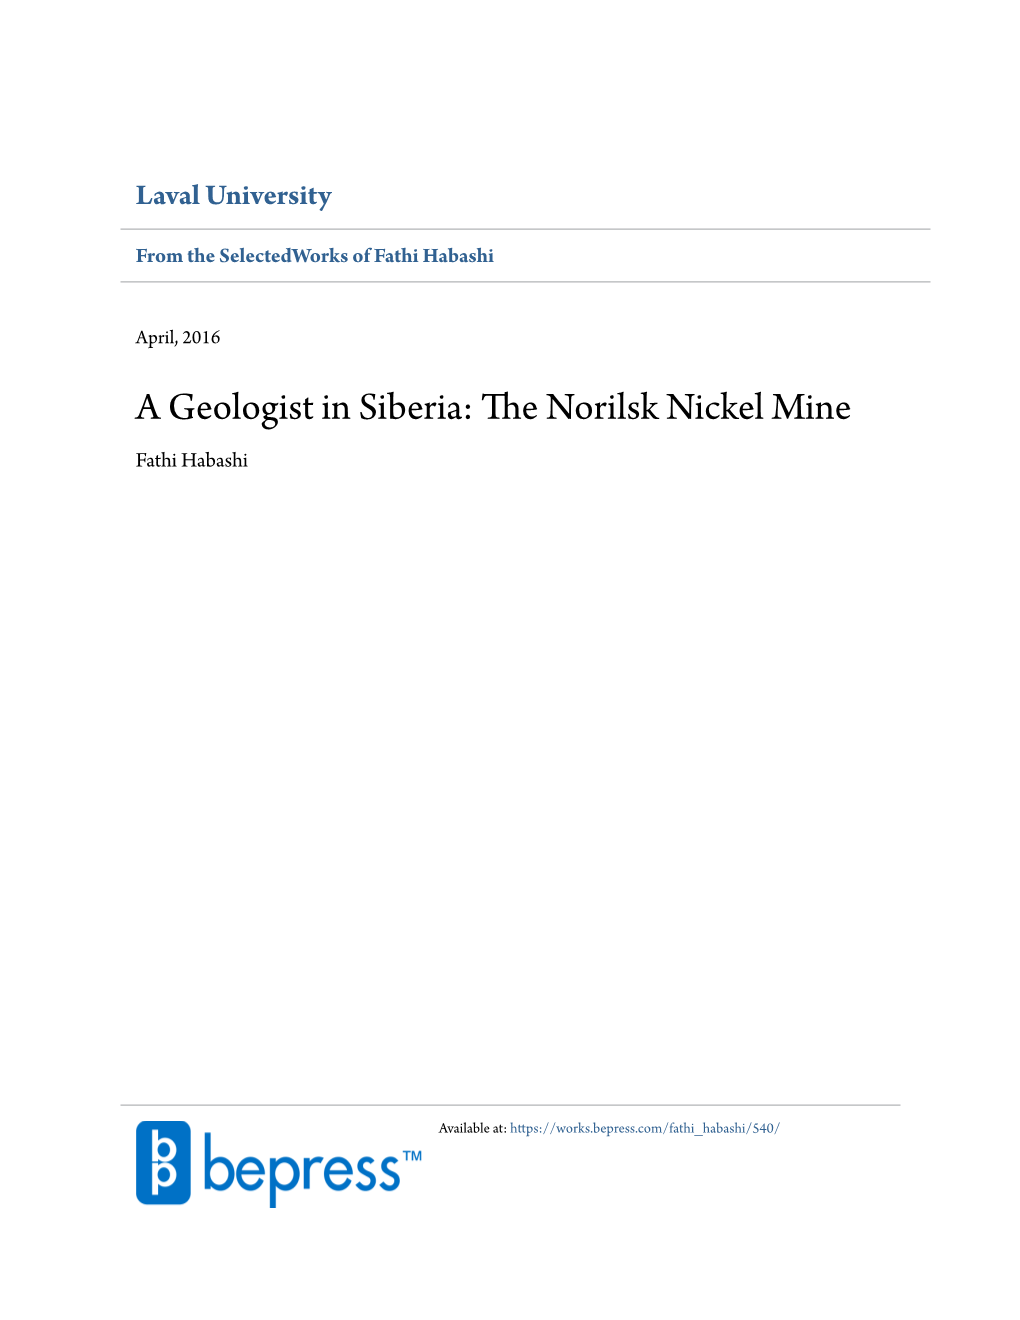 A Geologist in Siberia: the Norilsk Nickel Mine